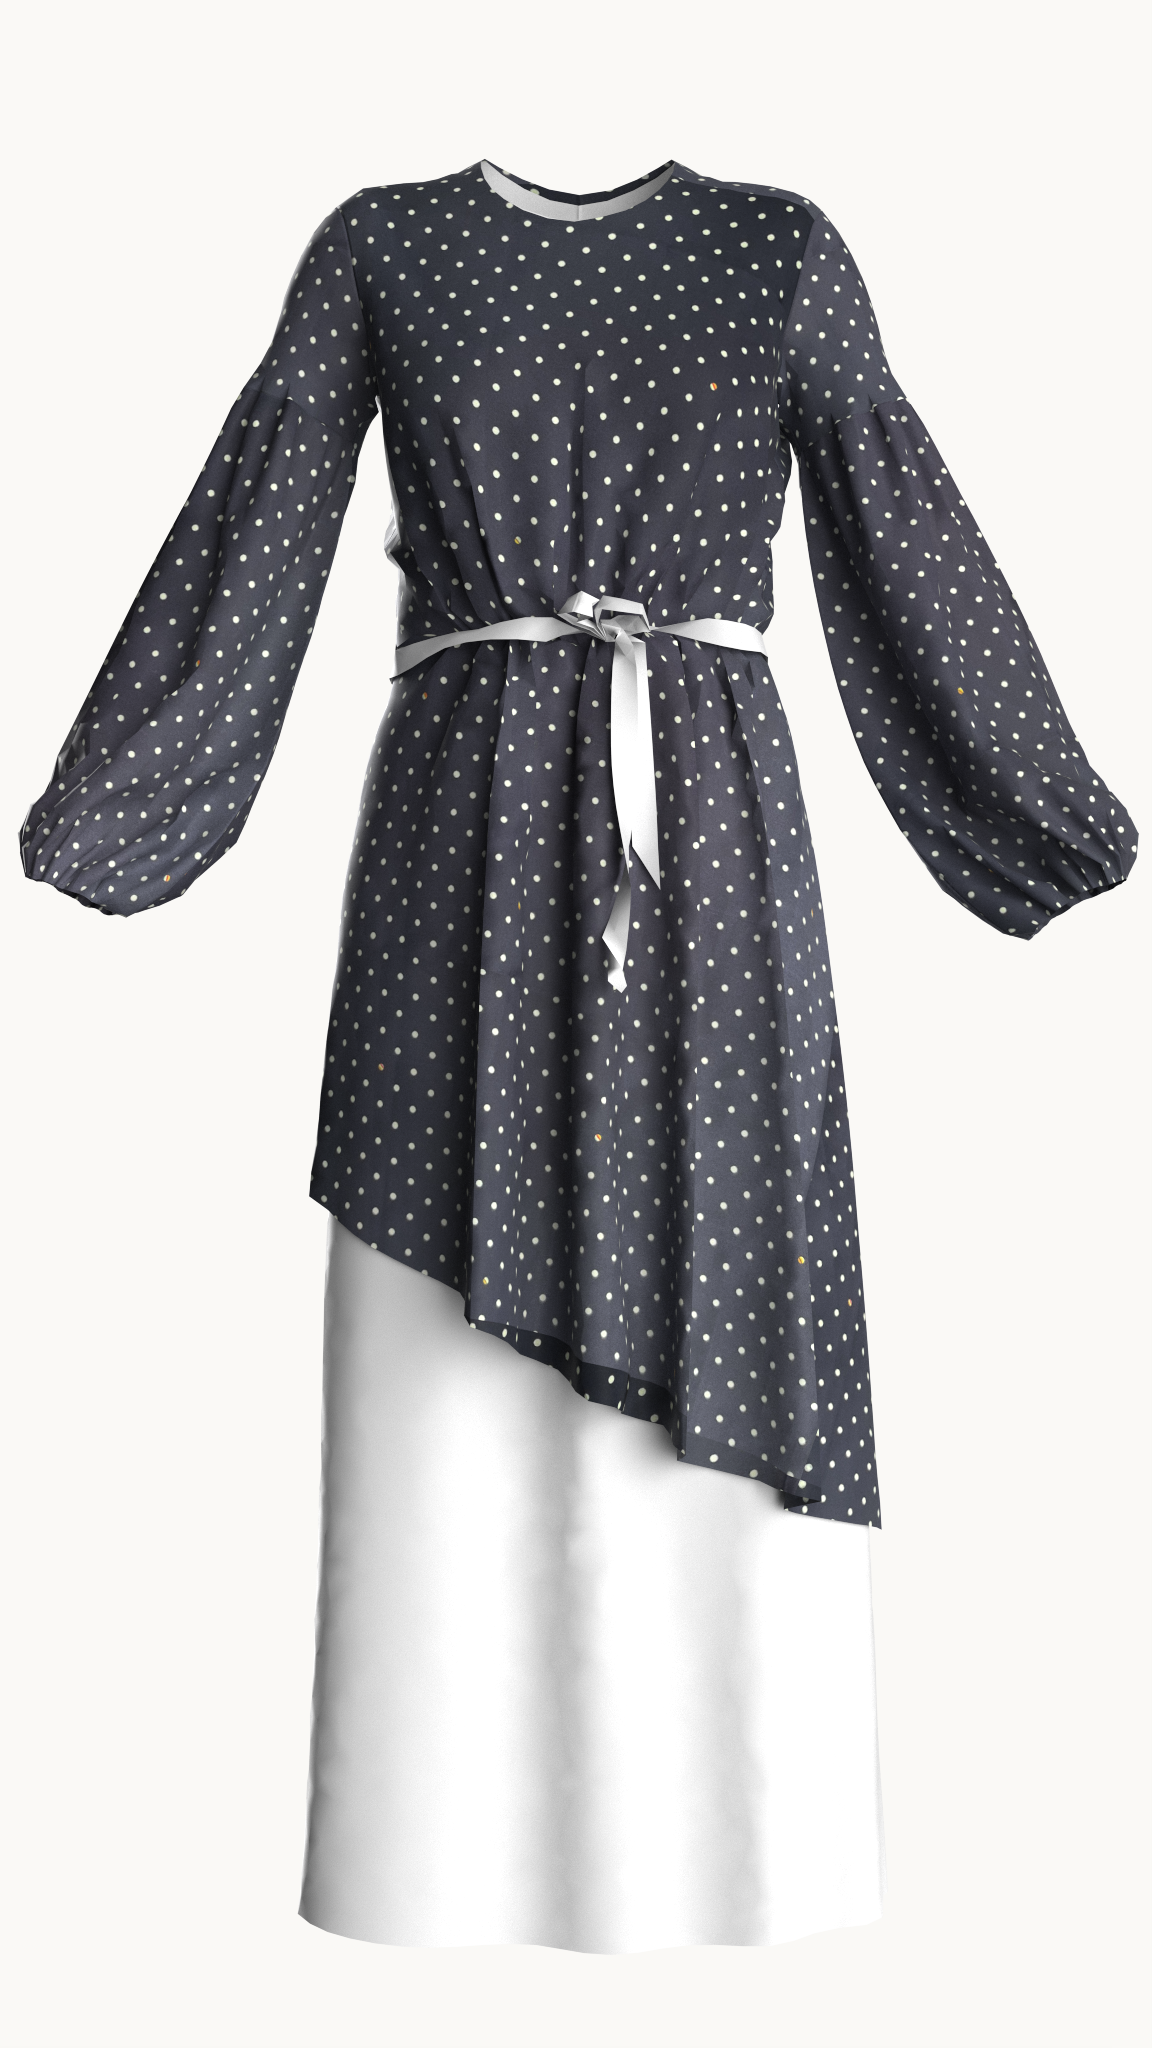 Double layered maxi dress (plus size)